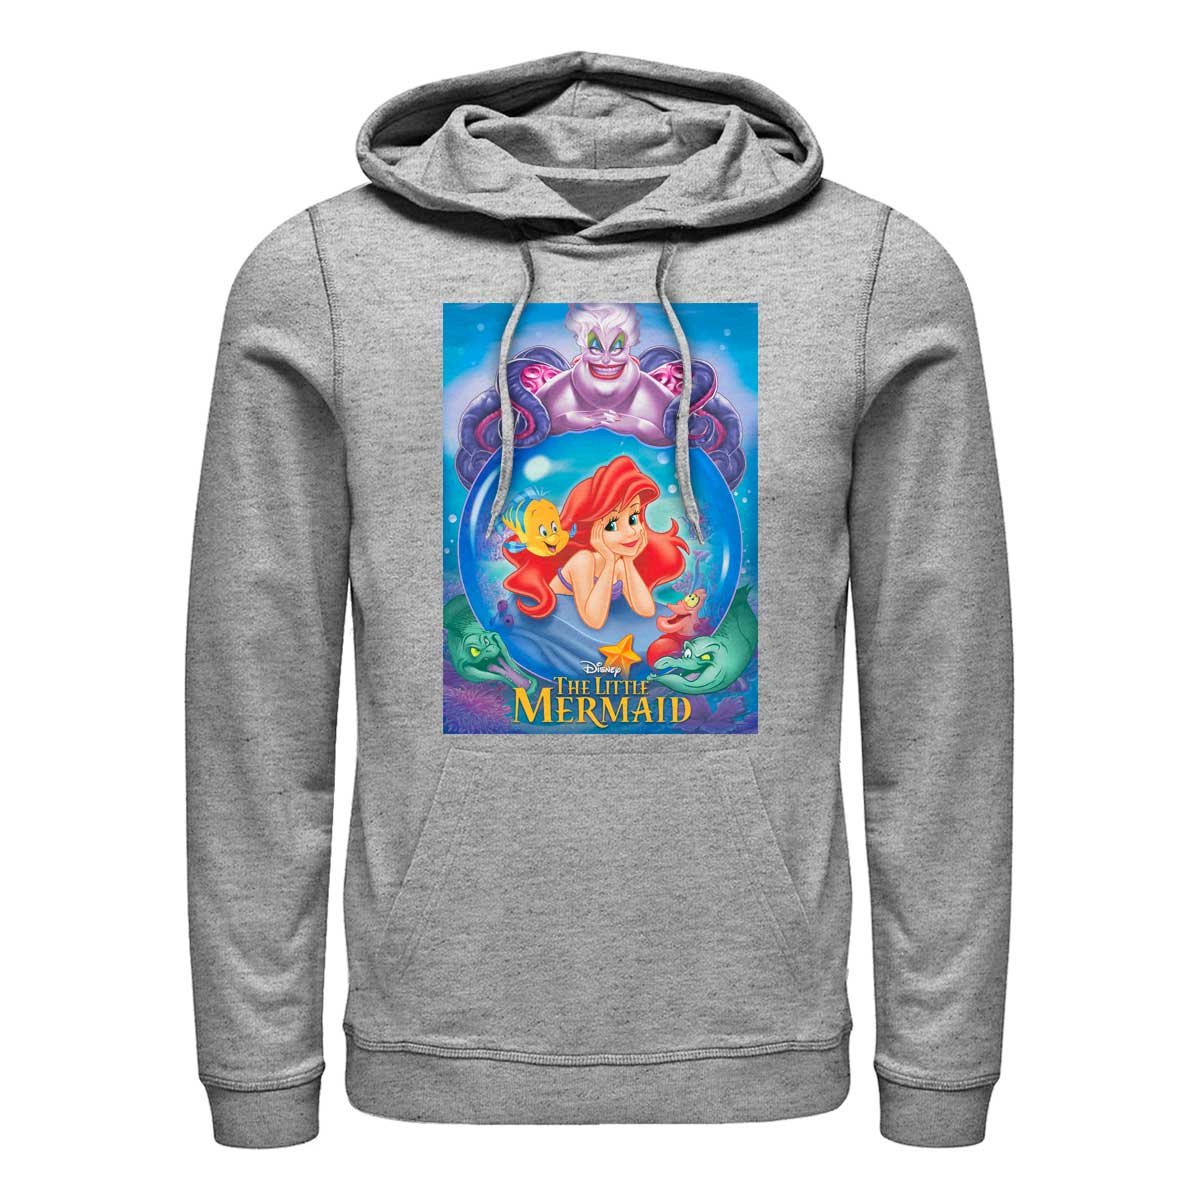 Disney - Arielle die Meerjungfrau - Arielle & Ursula Ariel and Ursula -  Unisex Hoodie | Shirtinator